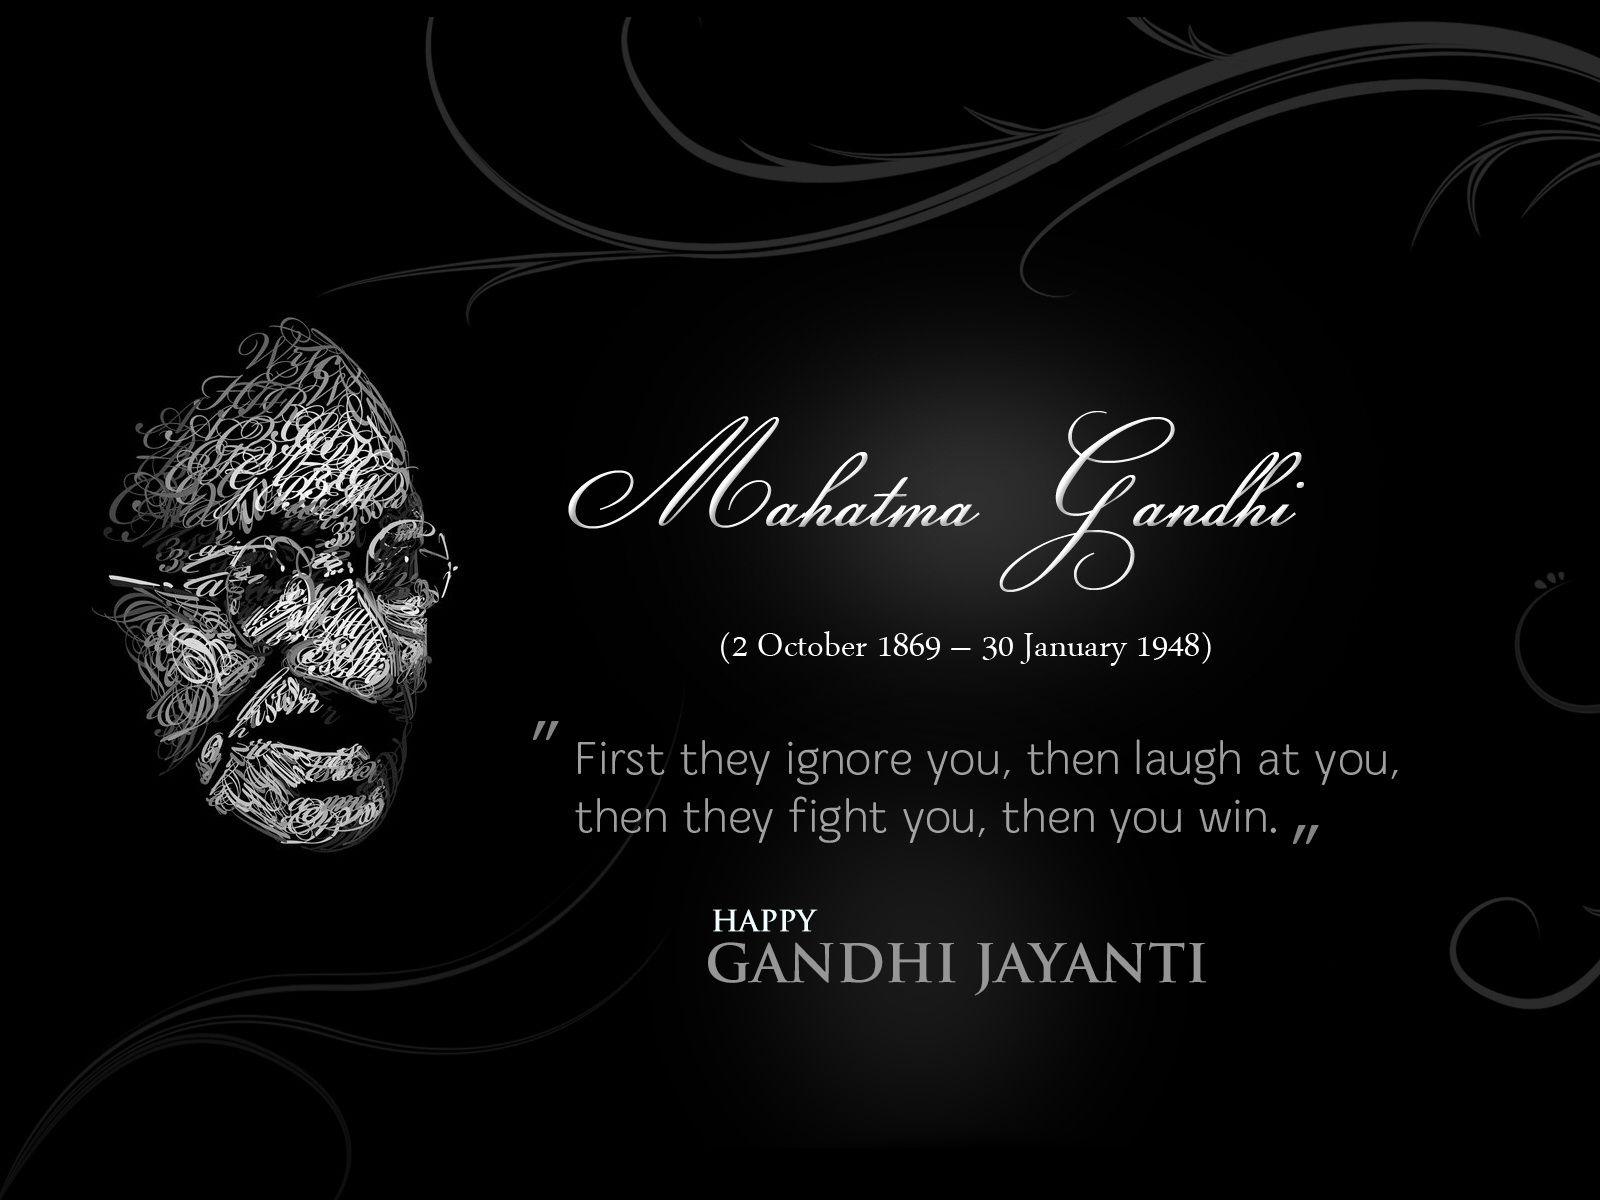 Gandhi Jayanti October 2 HD Success Quotes Wallpaper